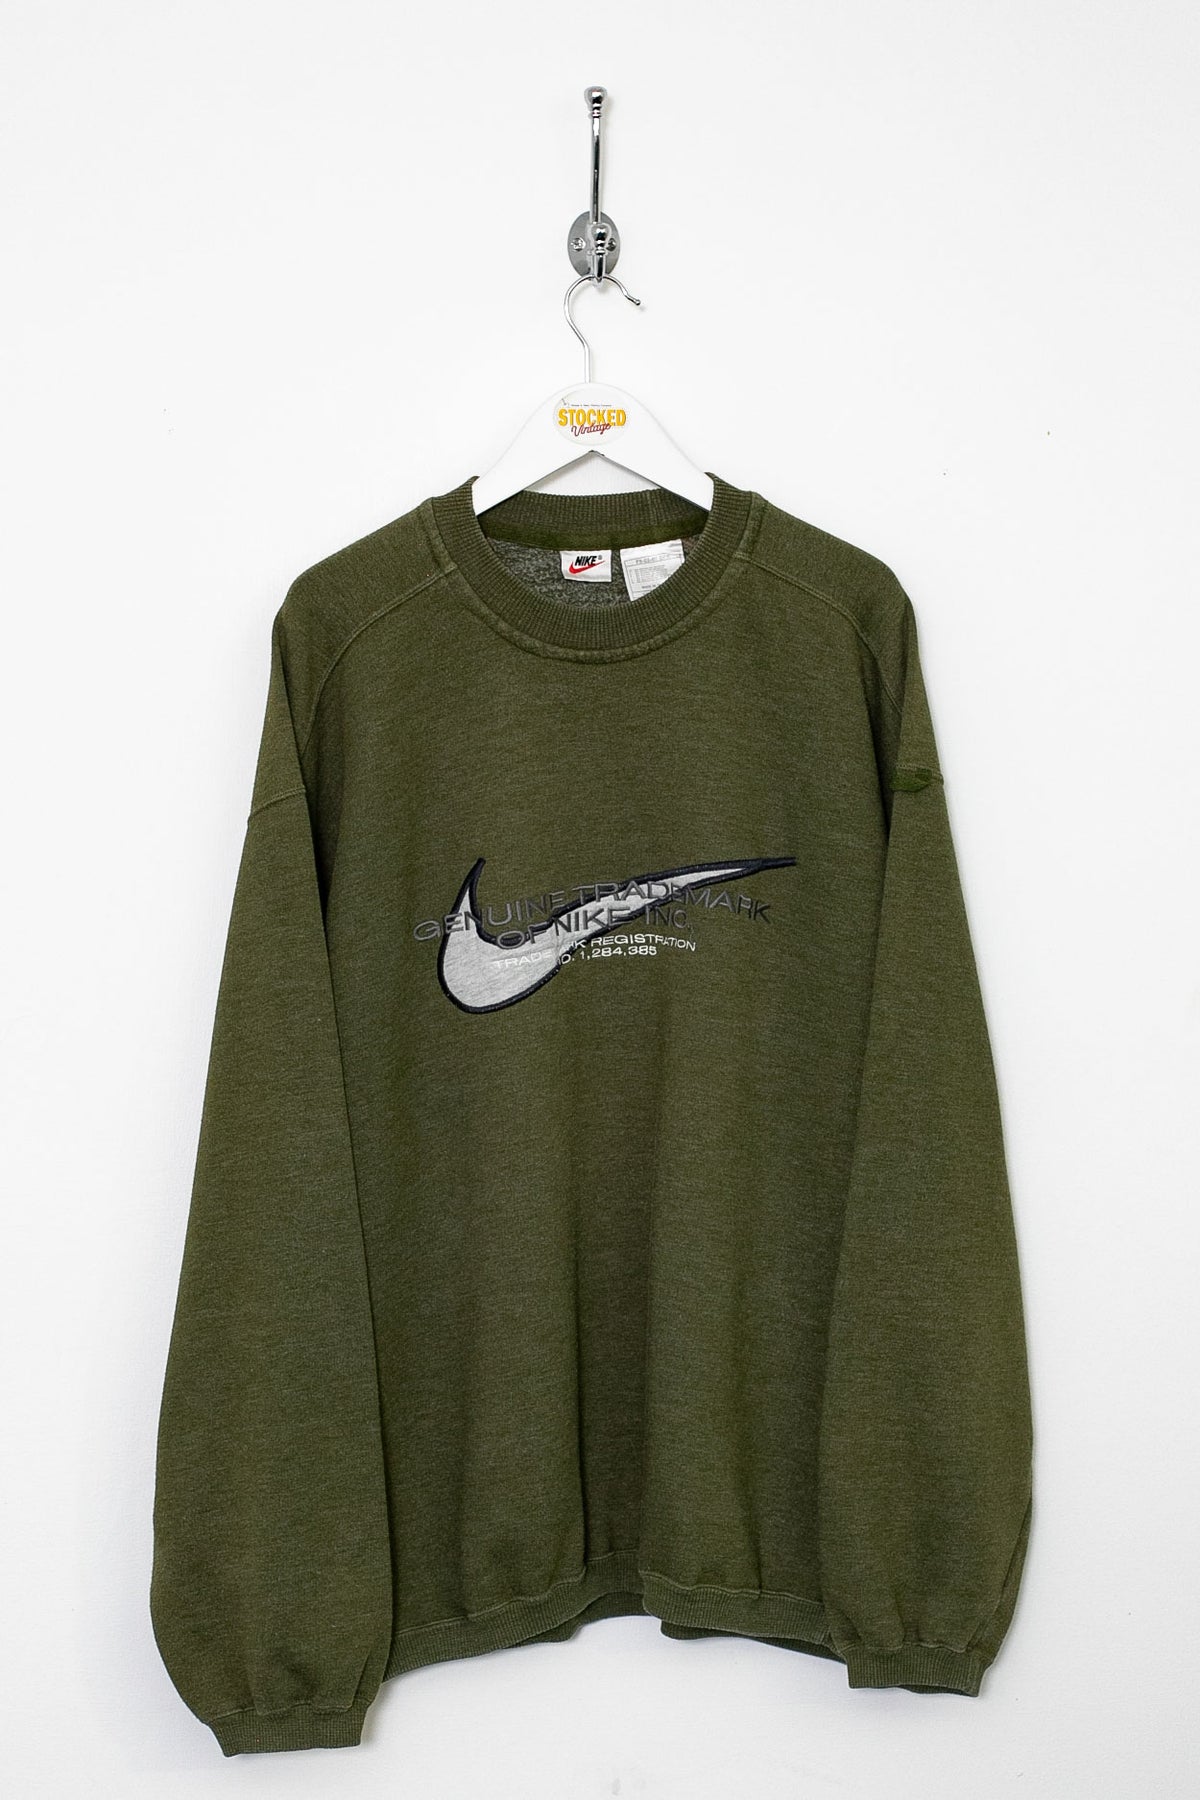 90s Nike Sweatshirt (XL)